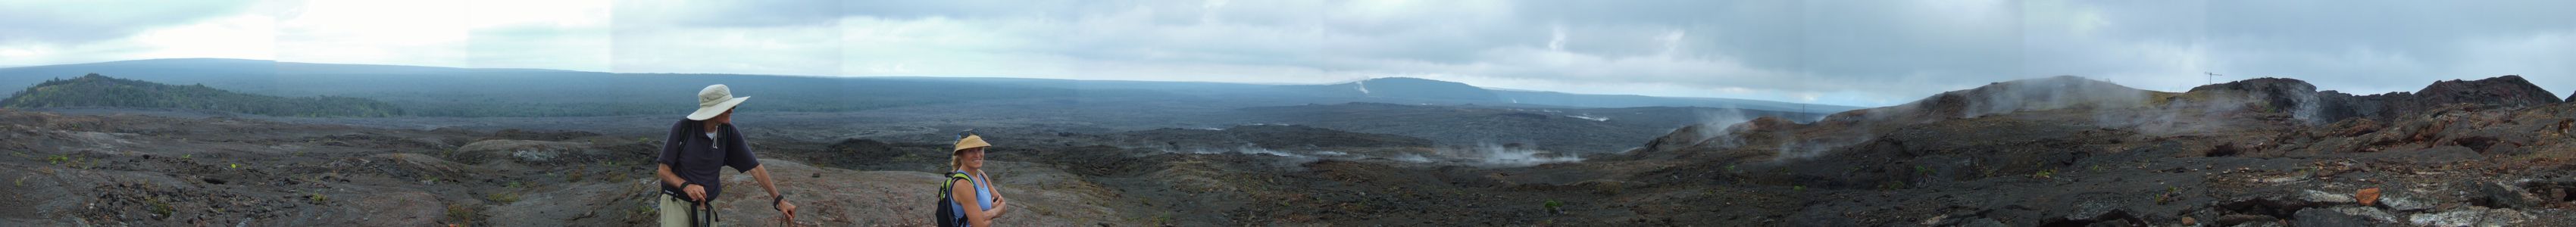 Mauna Ulu Panorama - 10/2012